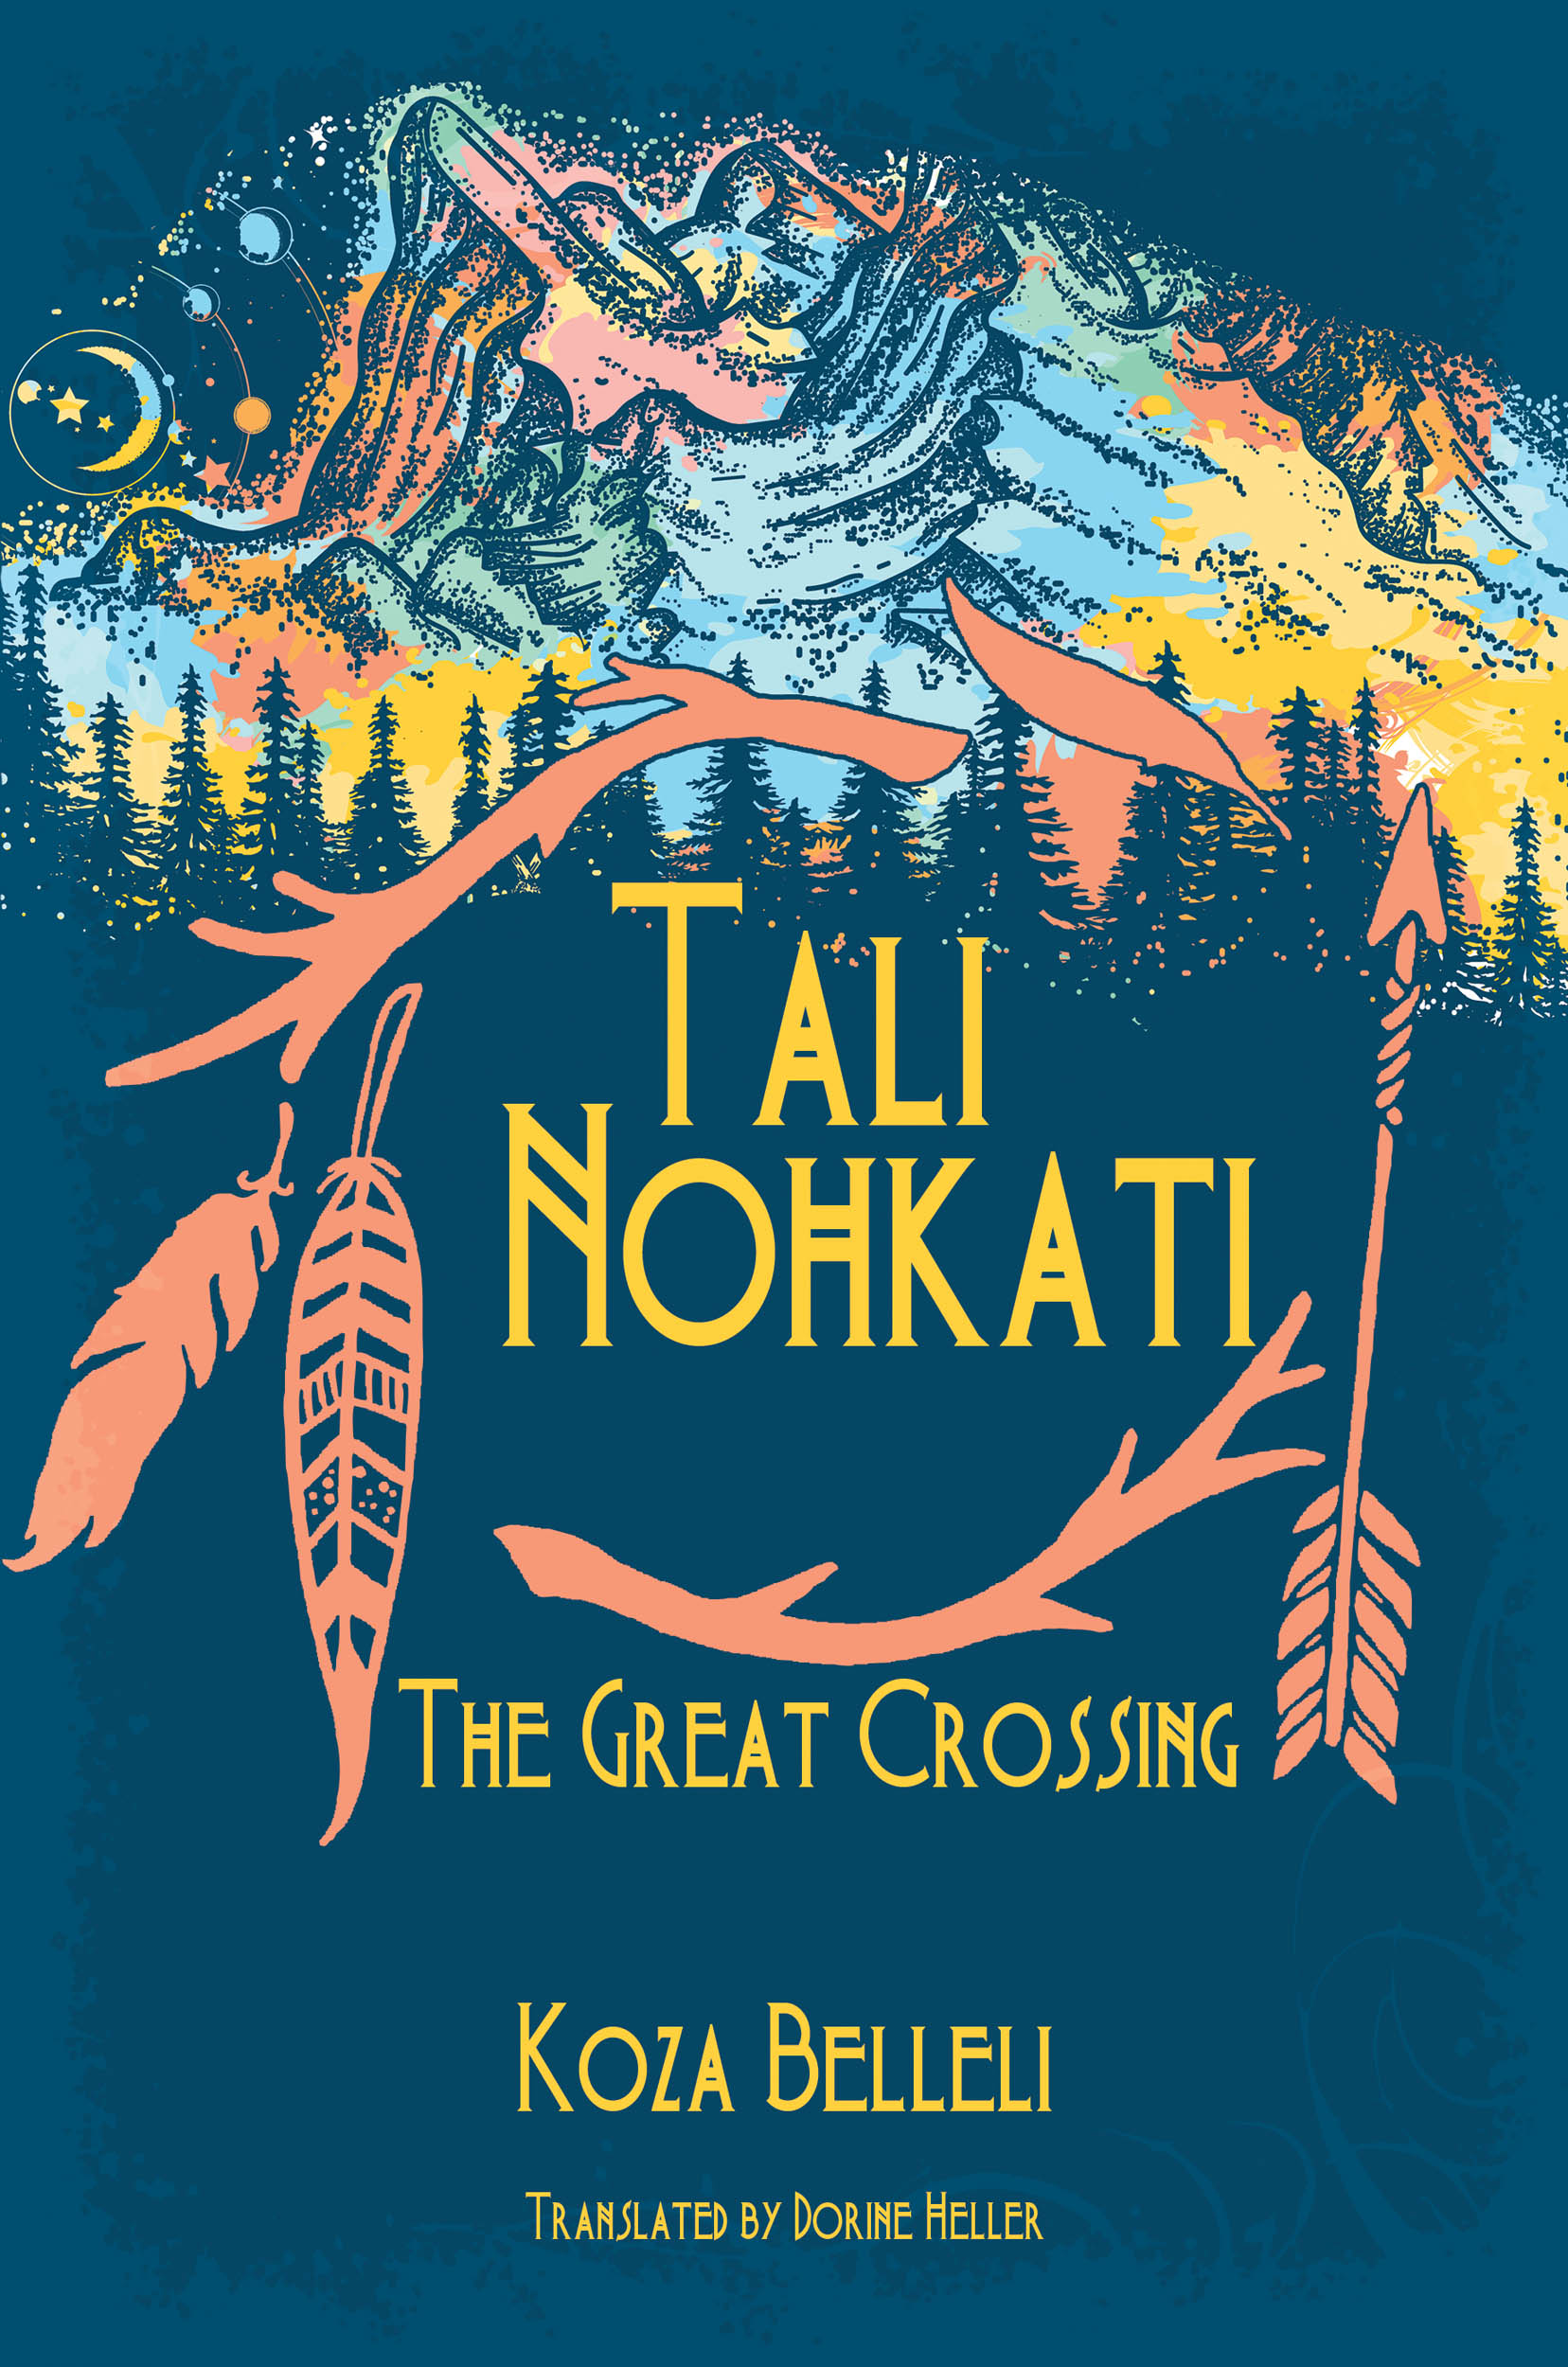 FREE: TALI NOHKATI, THE GREAT CROSSING by KOZA BELLELI